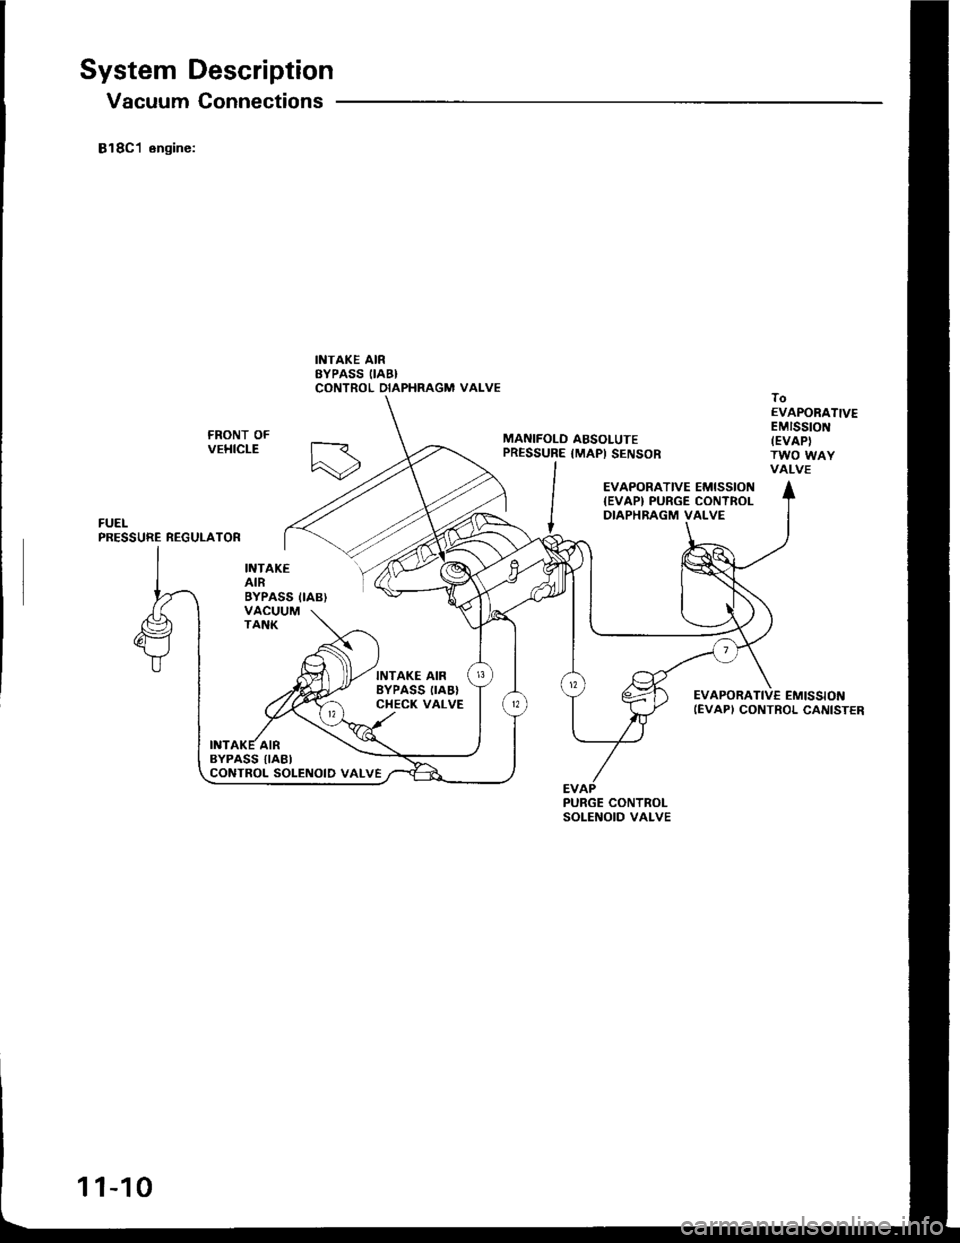 HONDA INTEGRA 1994 4.G Workshop Manual System Description
Vacuum Connections
818C1 engine:
INTAKEAIRBYPASS IIAB}VACUUMTANK
INTAKE AIRSYPASS IIAB}CONTROL DIAPHRAGM VAI-VE
MANIFOLO ABSOLUTEPRESSURE {MAP) SENSOR
toEVAPORATIVEEMISStONIEVAPITWO